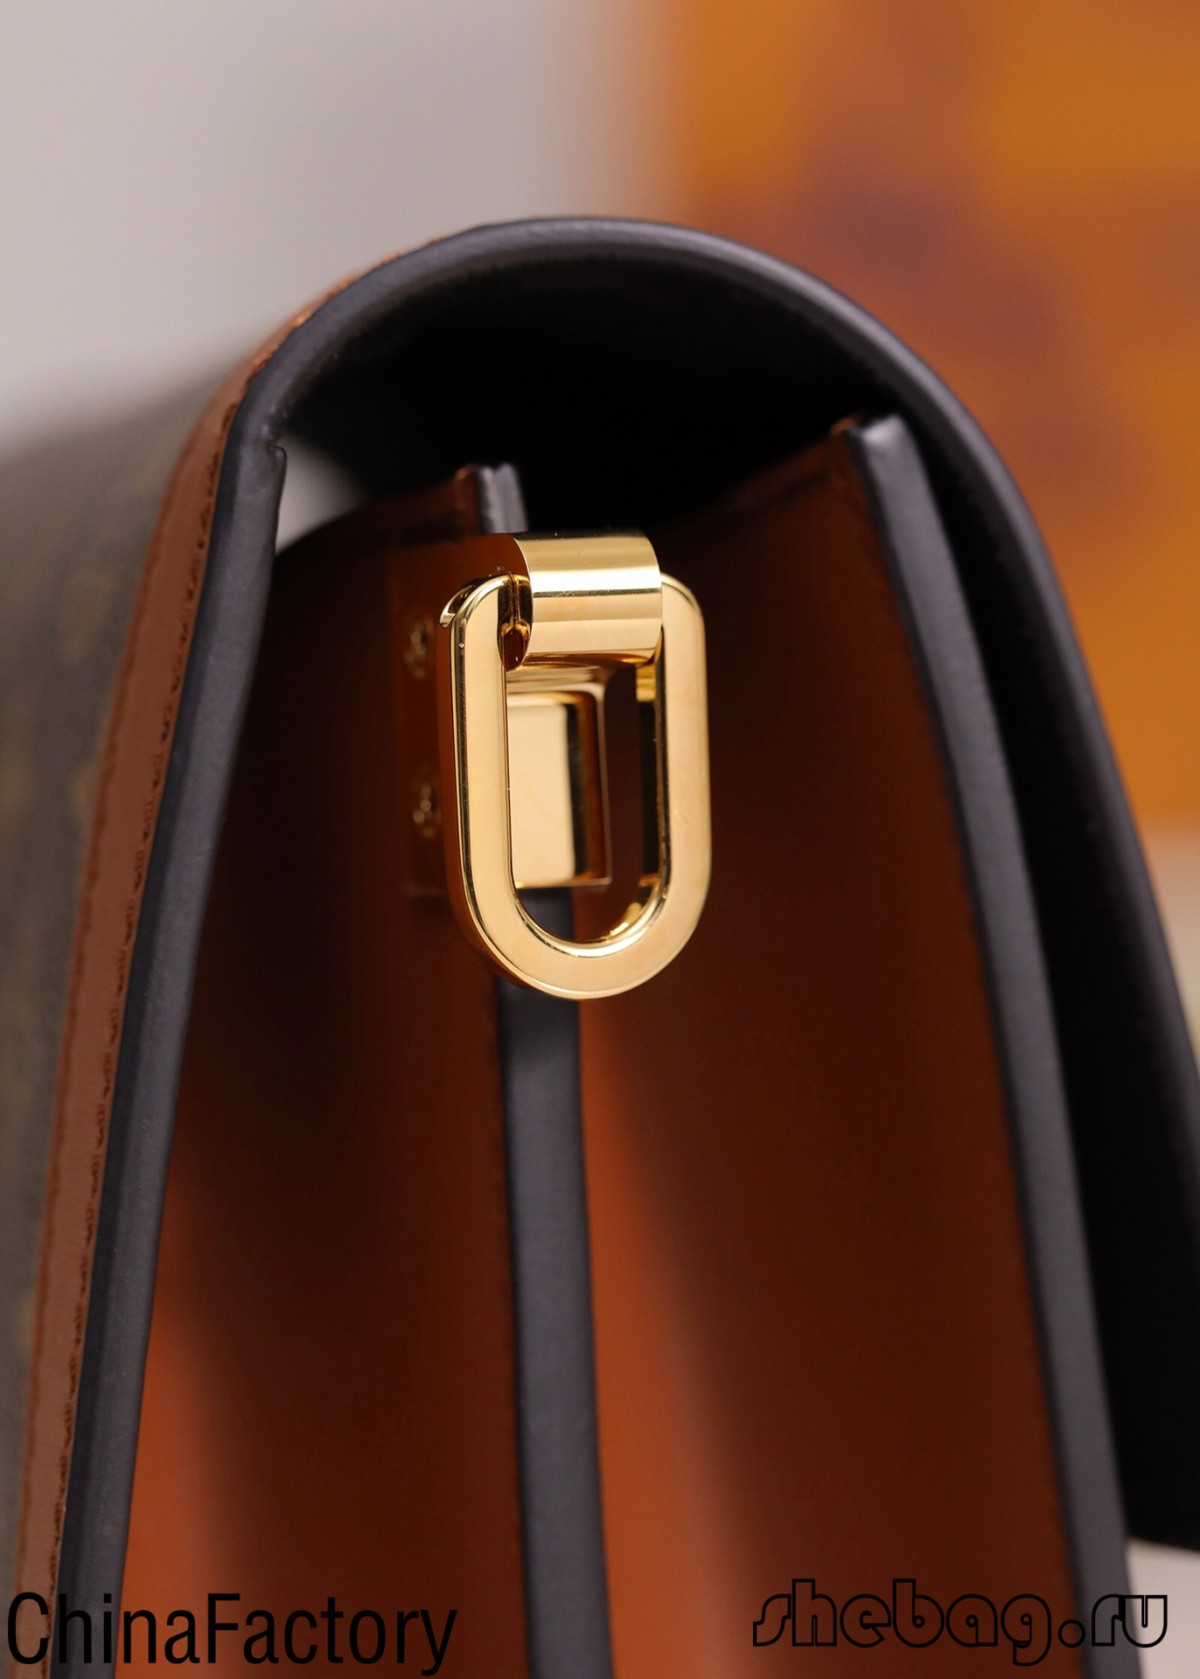 Želim kupiti repliku dizajnerskih torbi, preporuka DHGatea za najboljeg prodavača? (Ažuriranje 2022.)-Najkvalitetnija lažna torba Louis Vuitton online trgovina, replika dizajnerske torbe ru